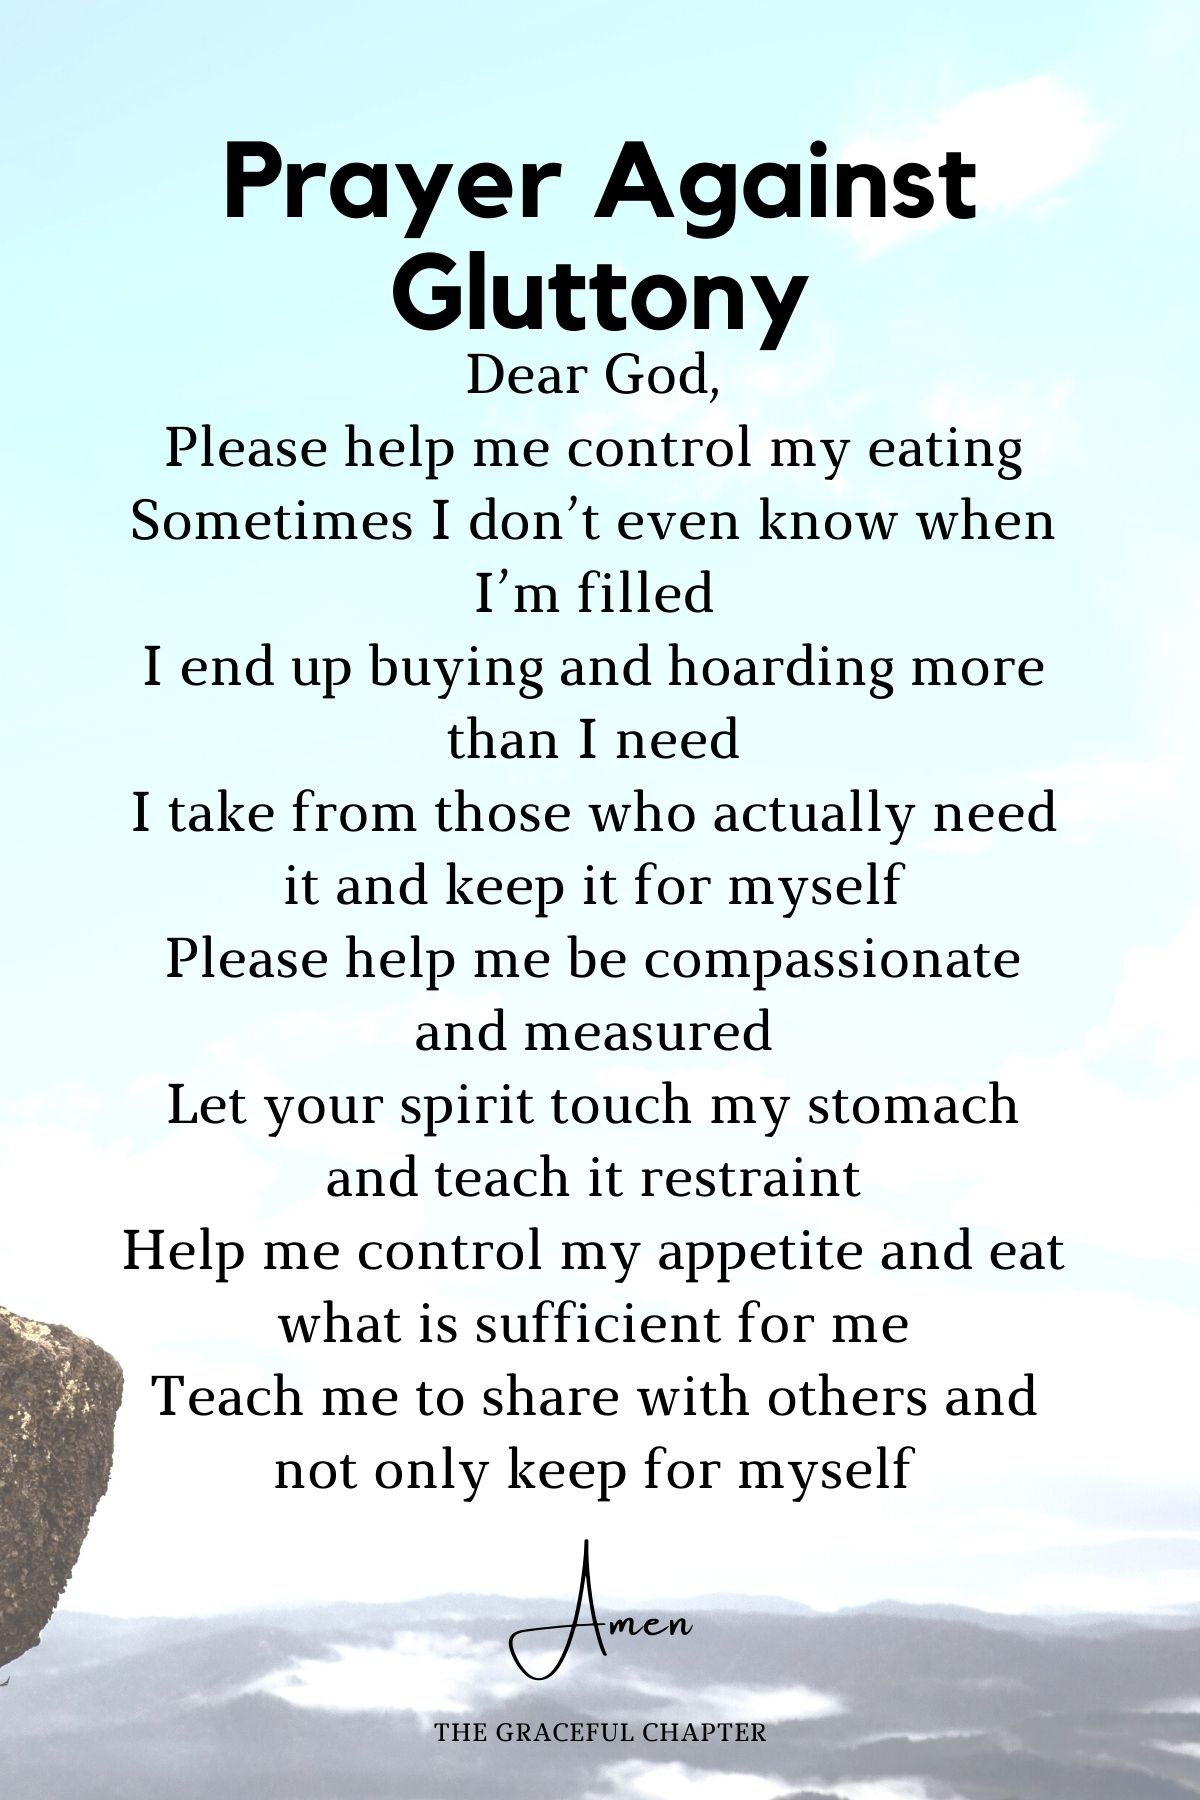 Prayer against gluttony